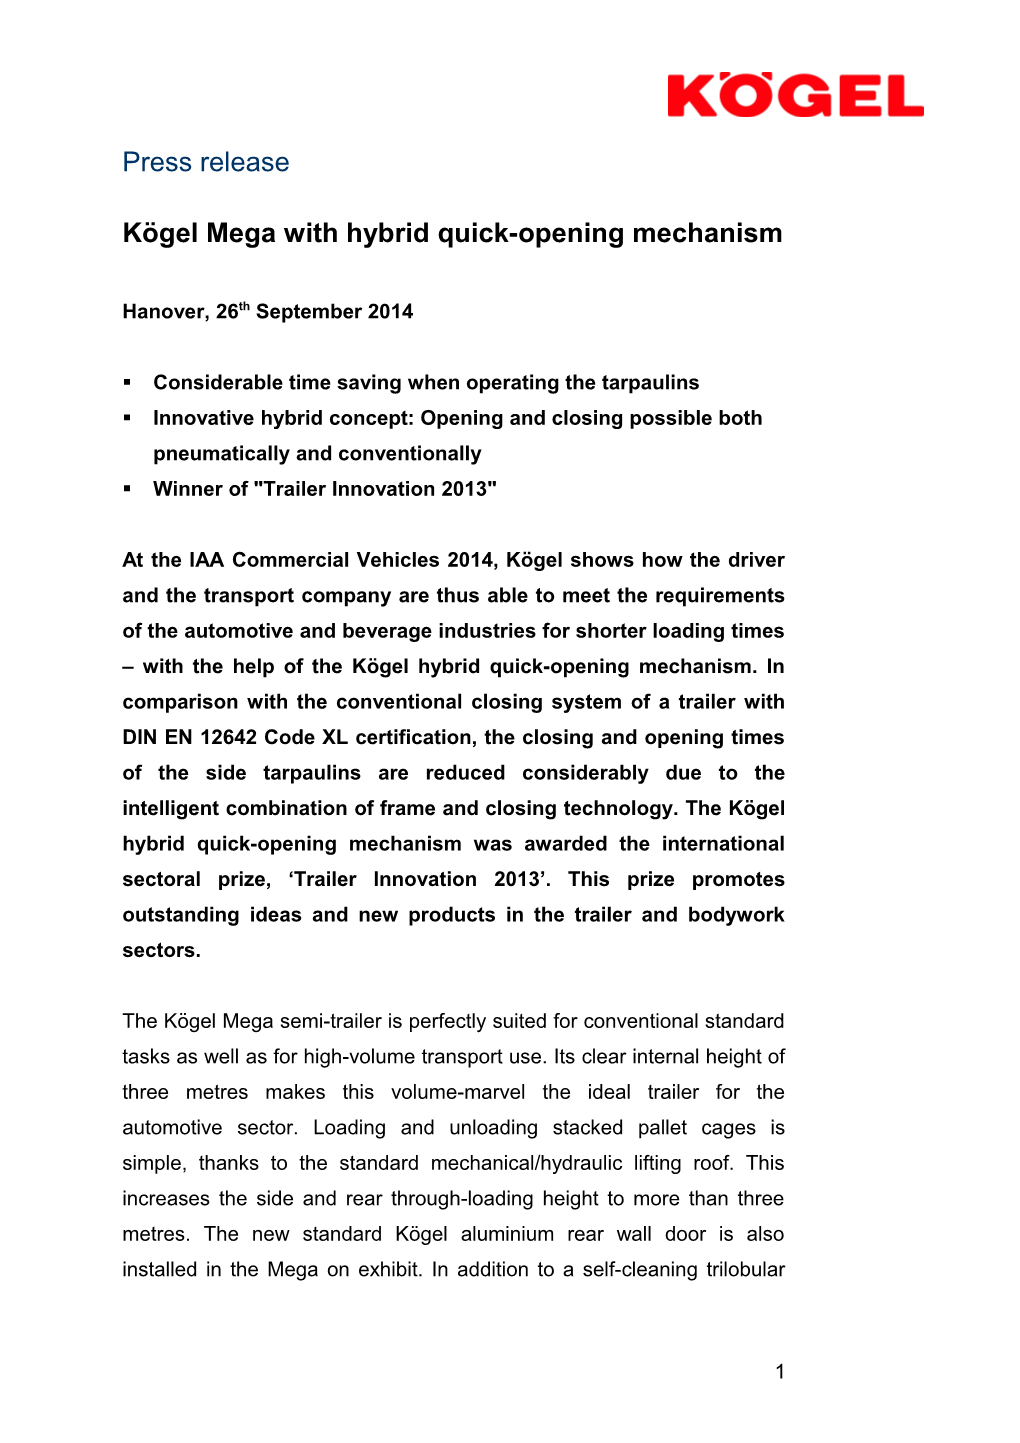 Kögel Mega with Hybrid Quick-Opening Mechanism